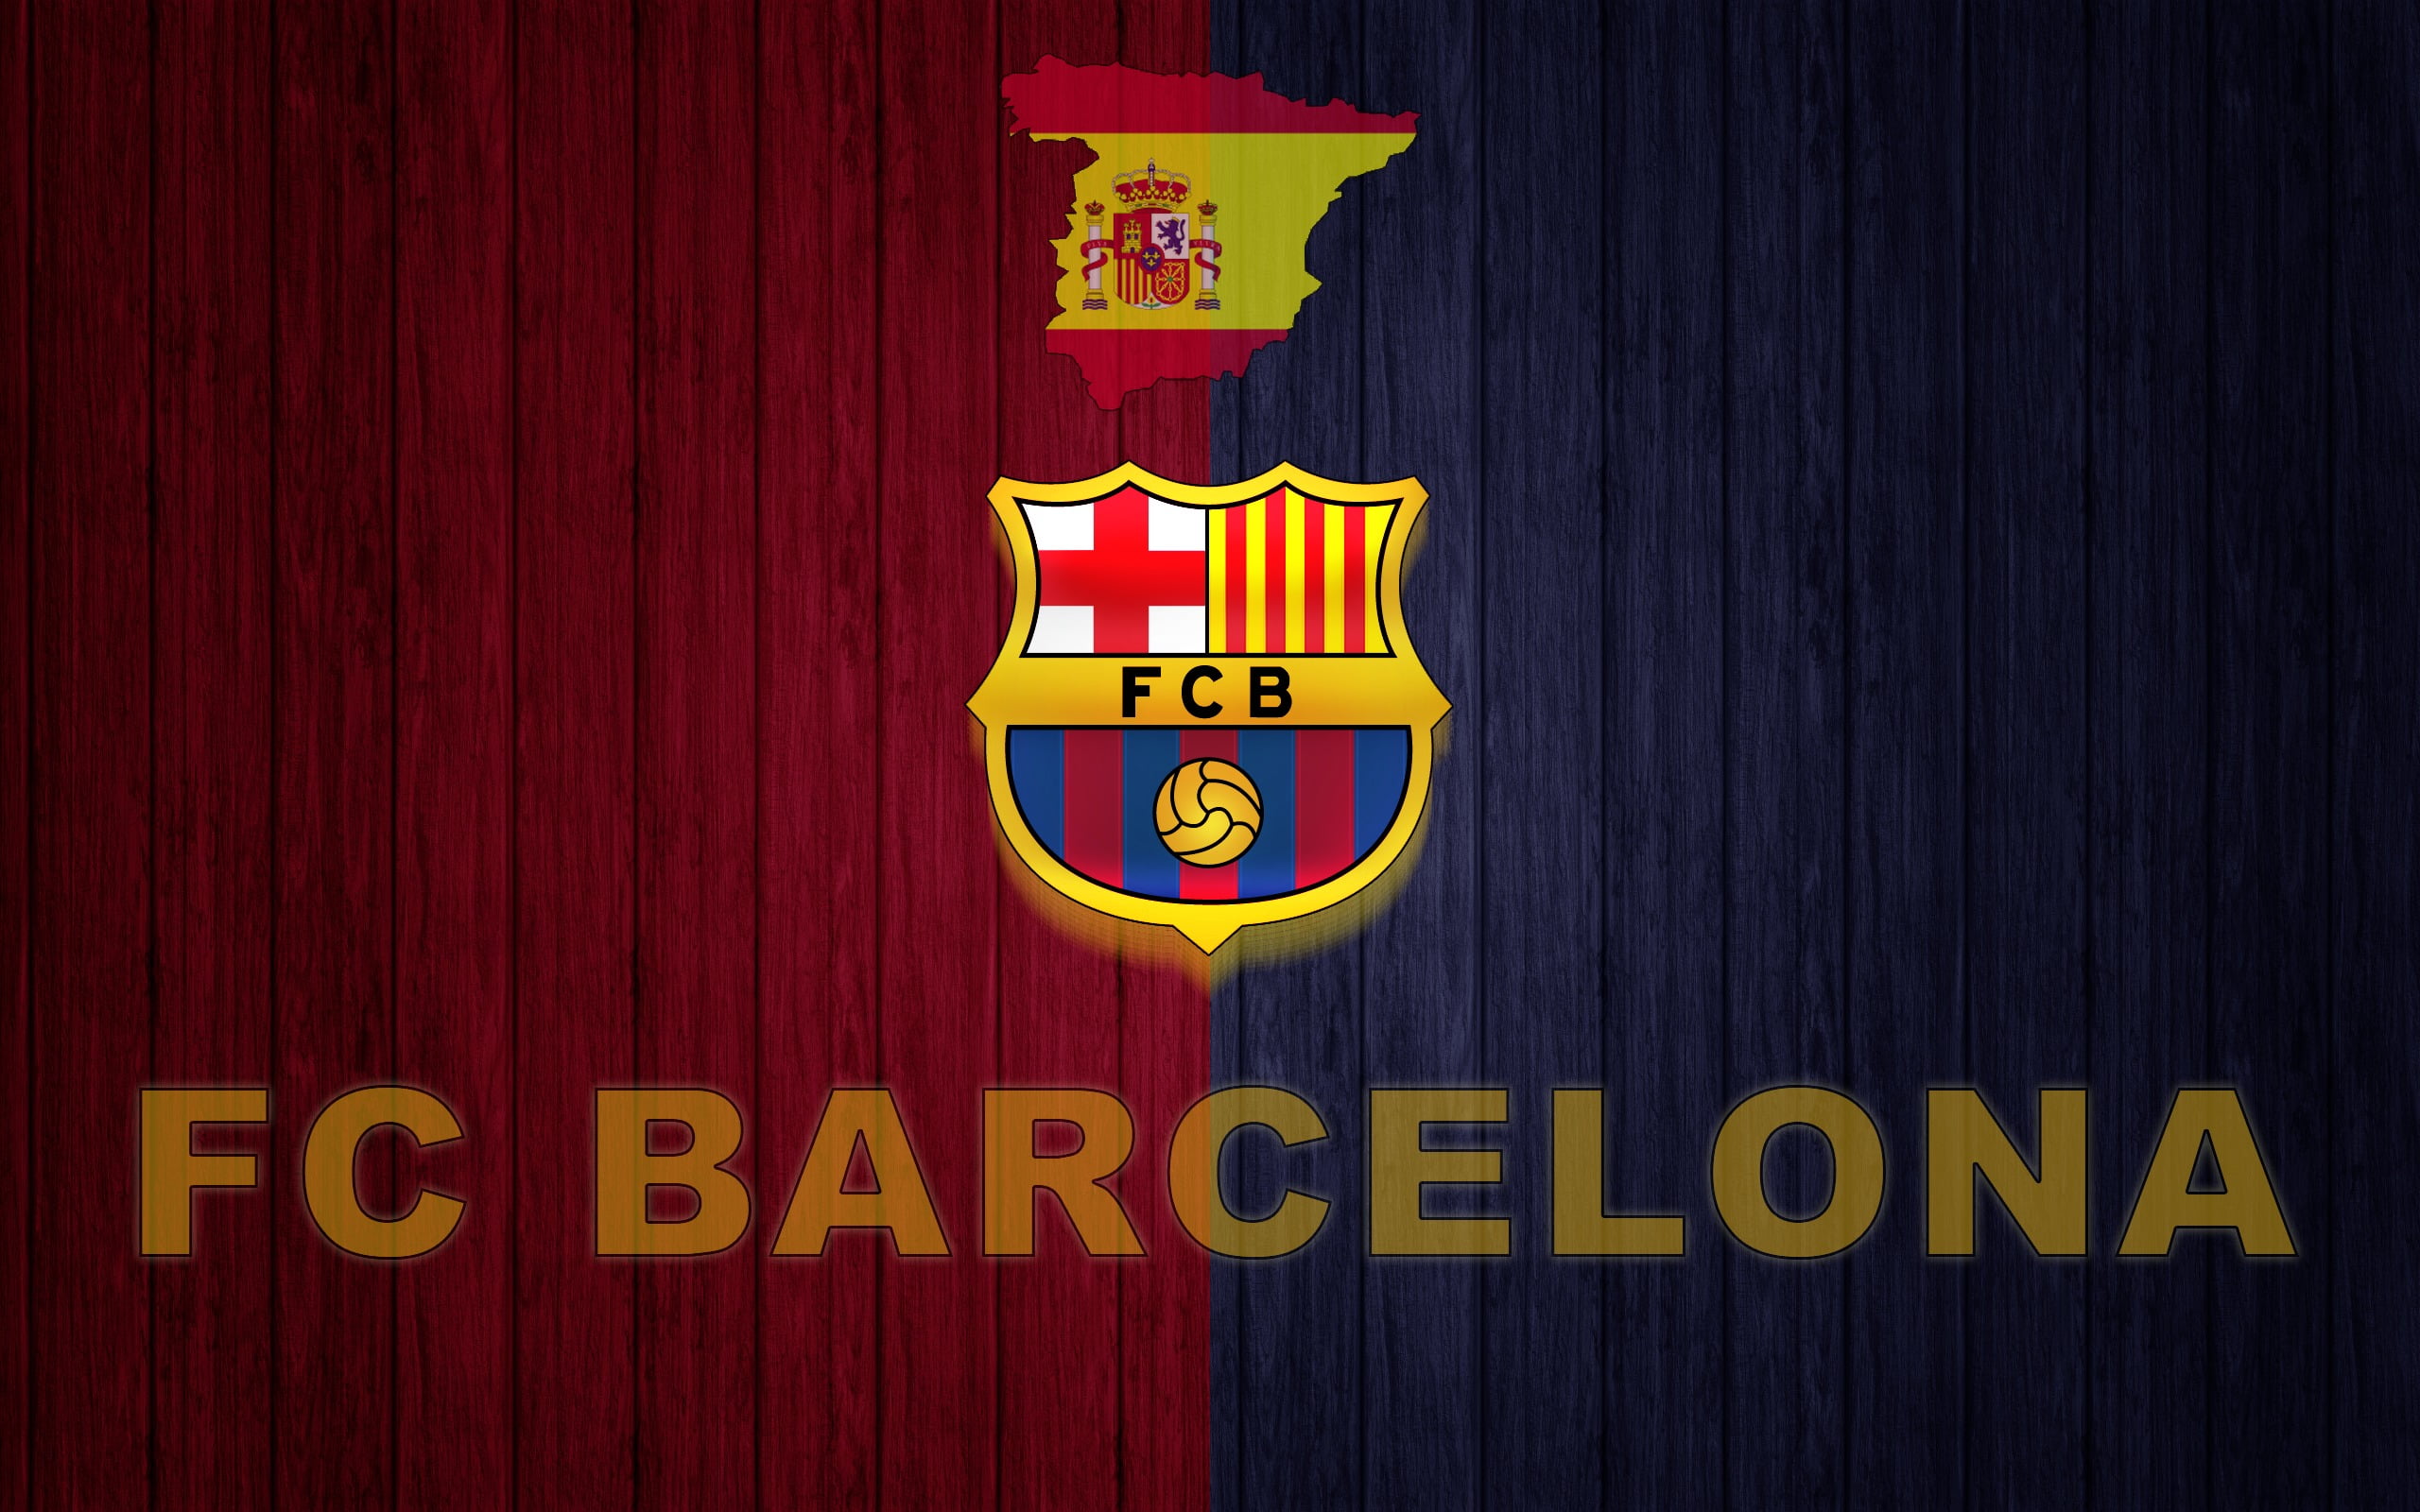 FC Barcelona logo, Spain, soccer clubs, barca, text, communication